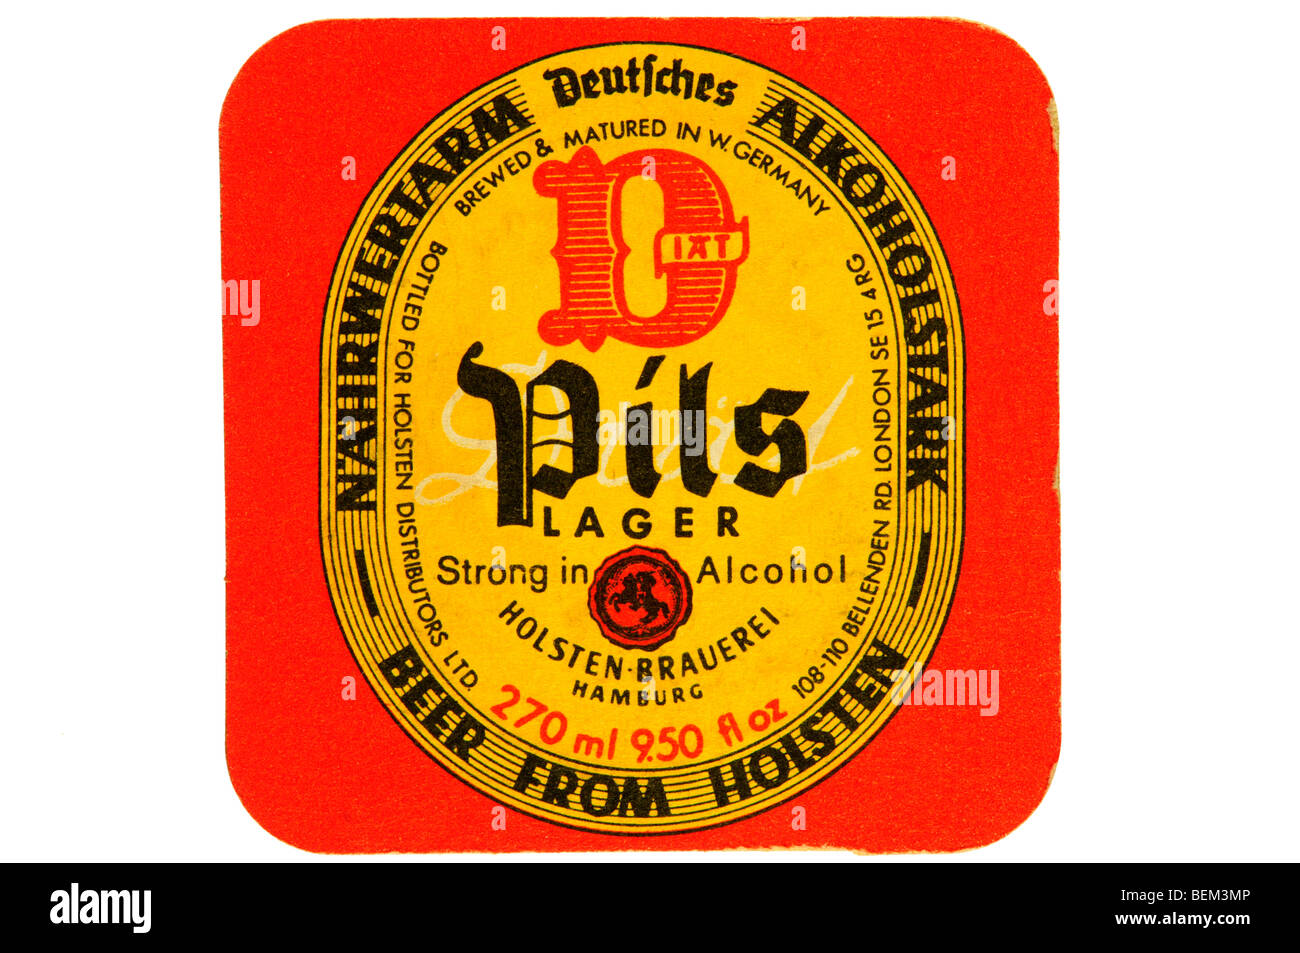 pils lager strong alcohol holsten braurei Stock Photo